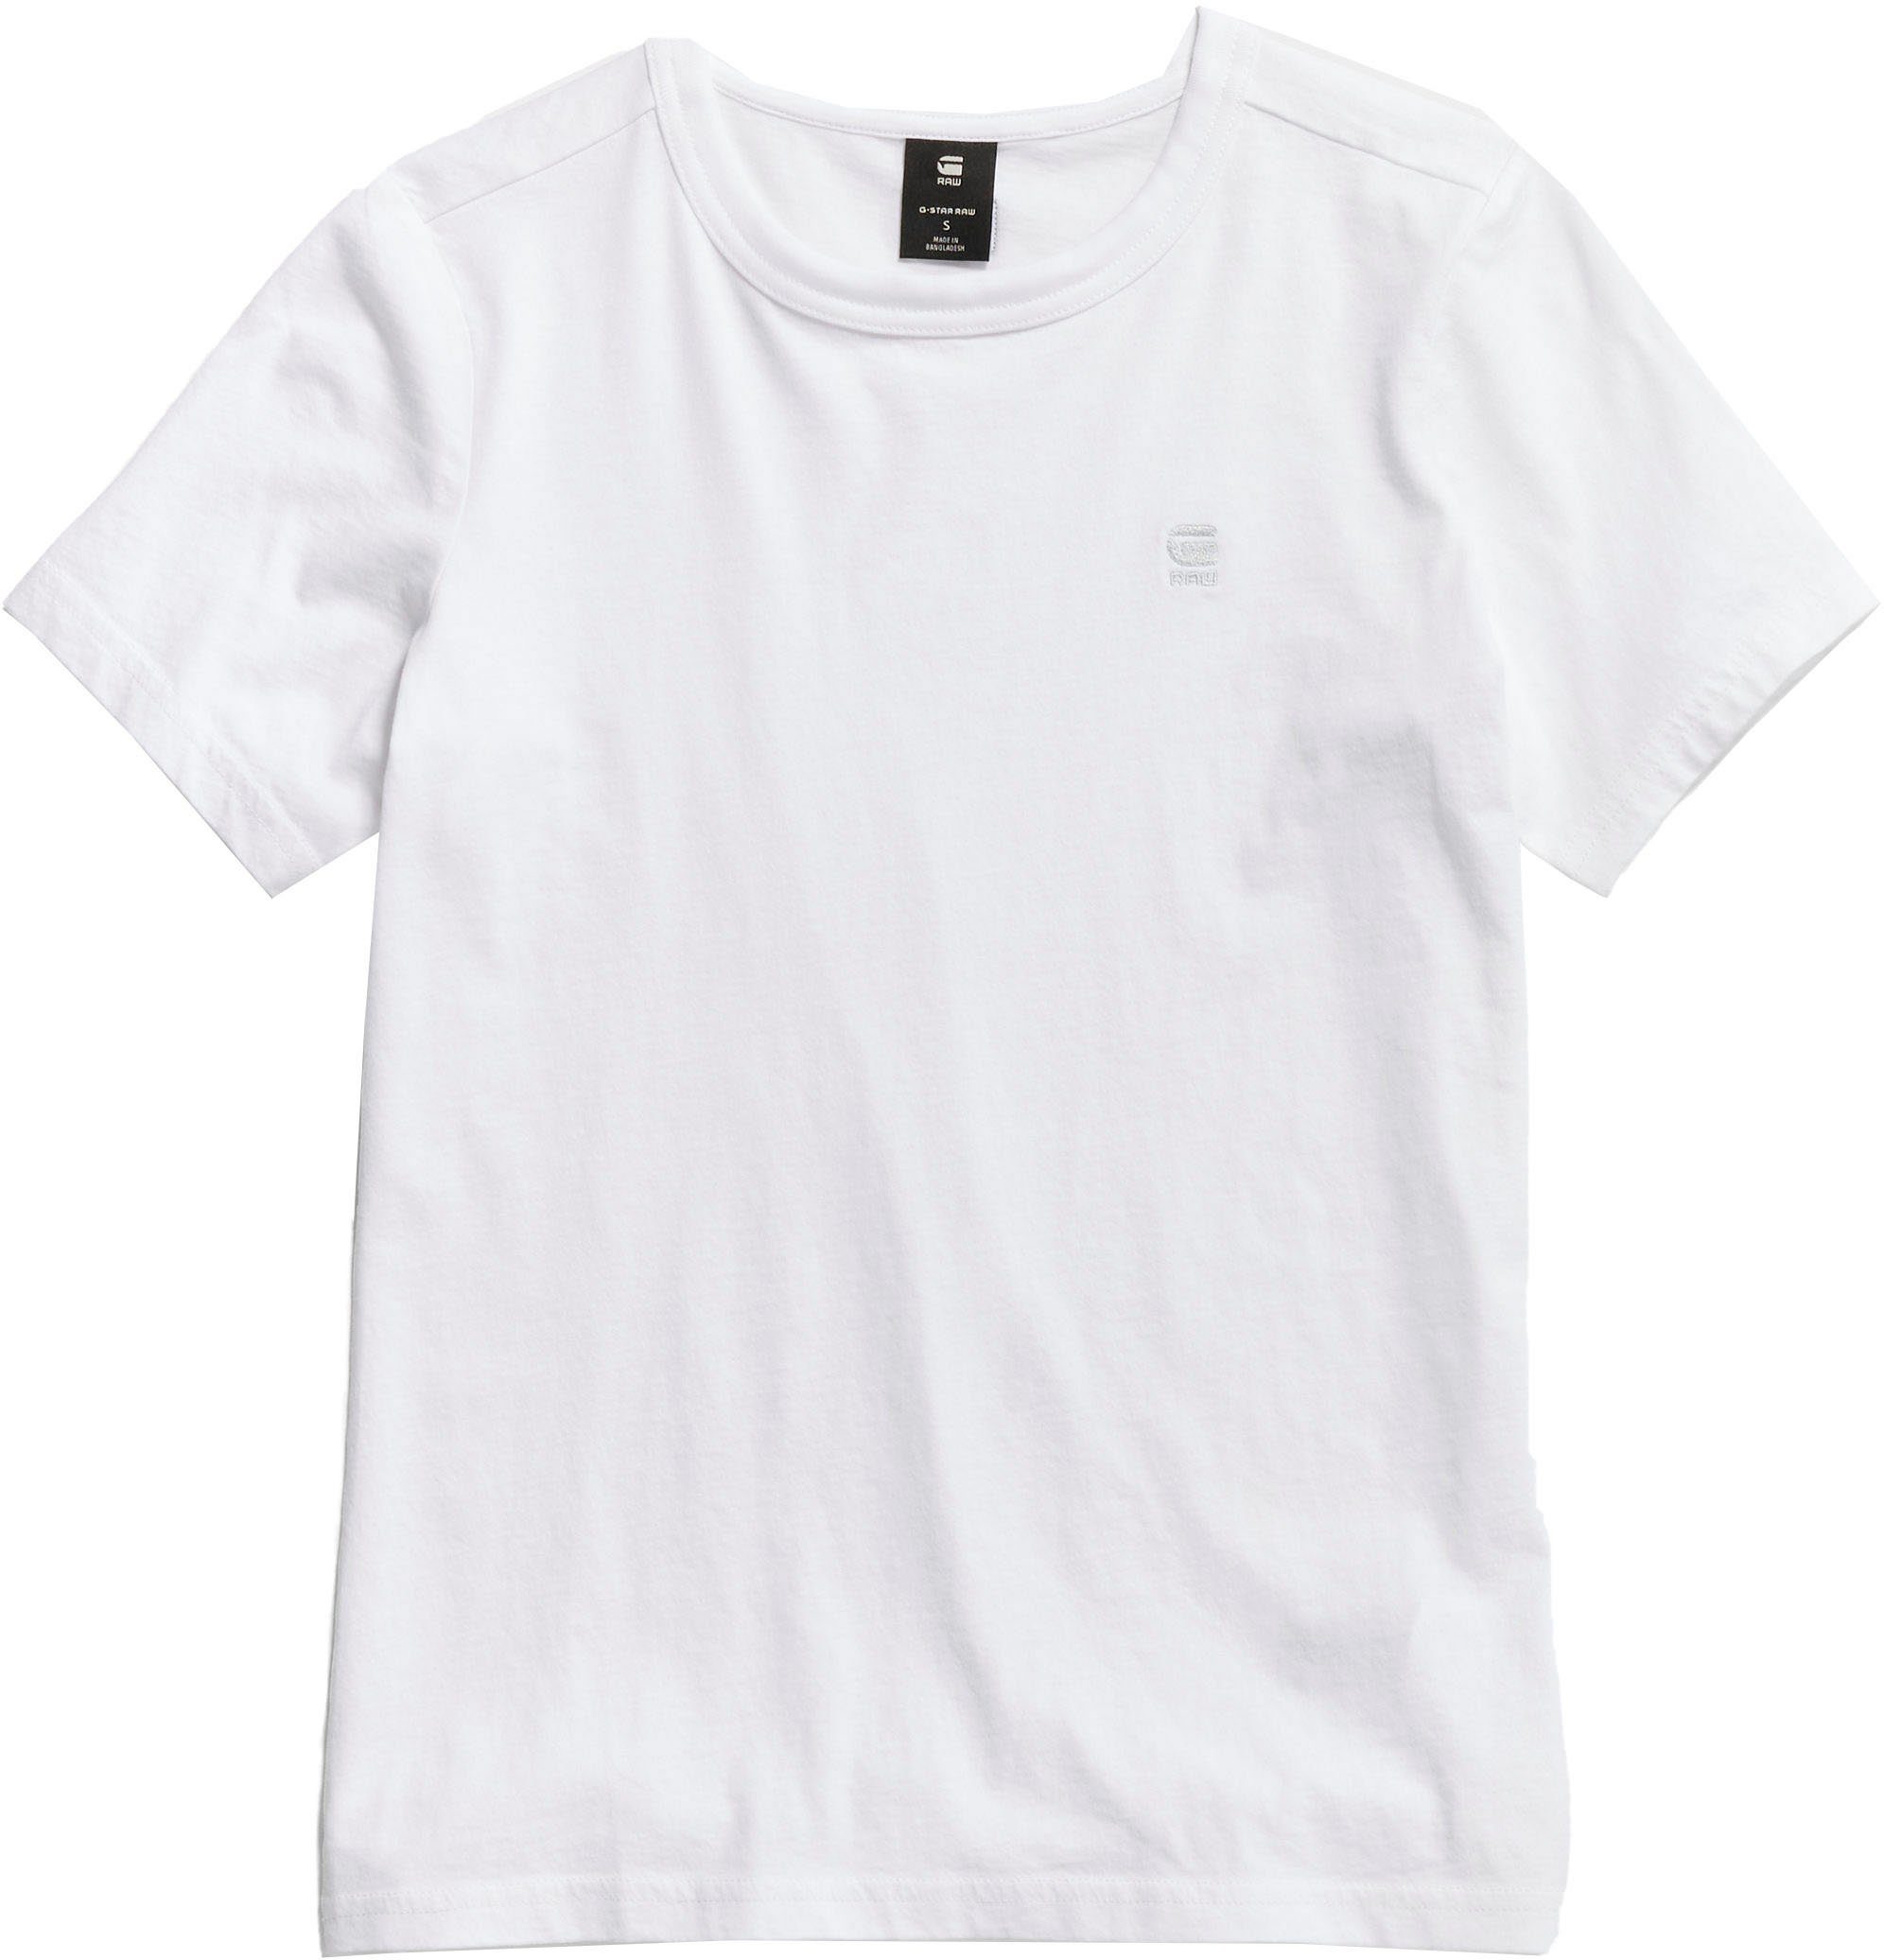 G-Star RAW T-Shirt Core t slim wmn r white